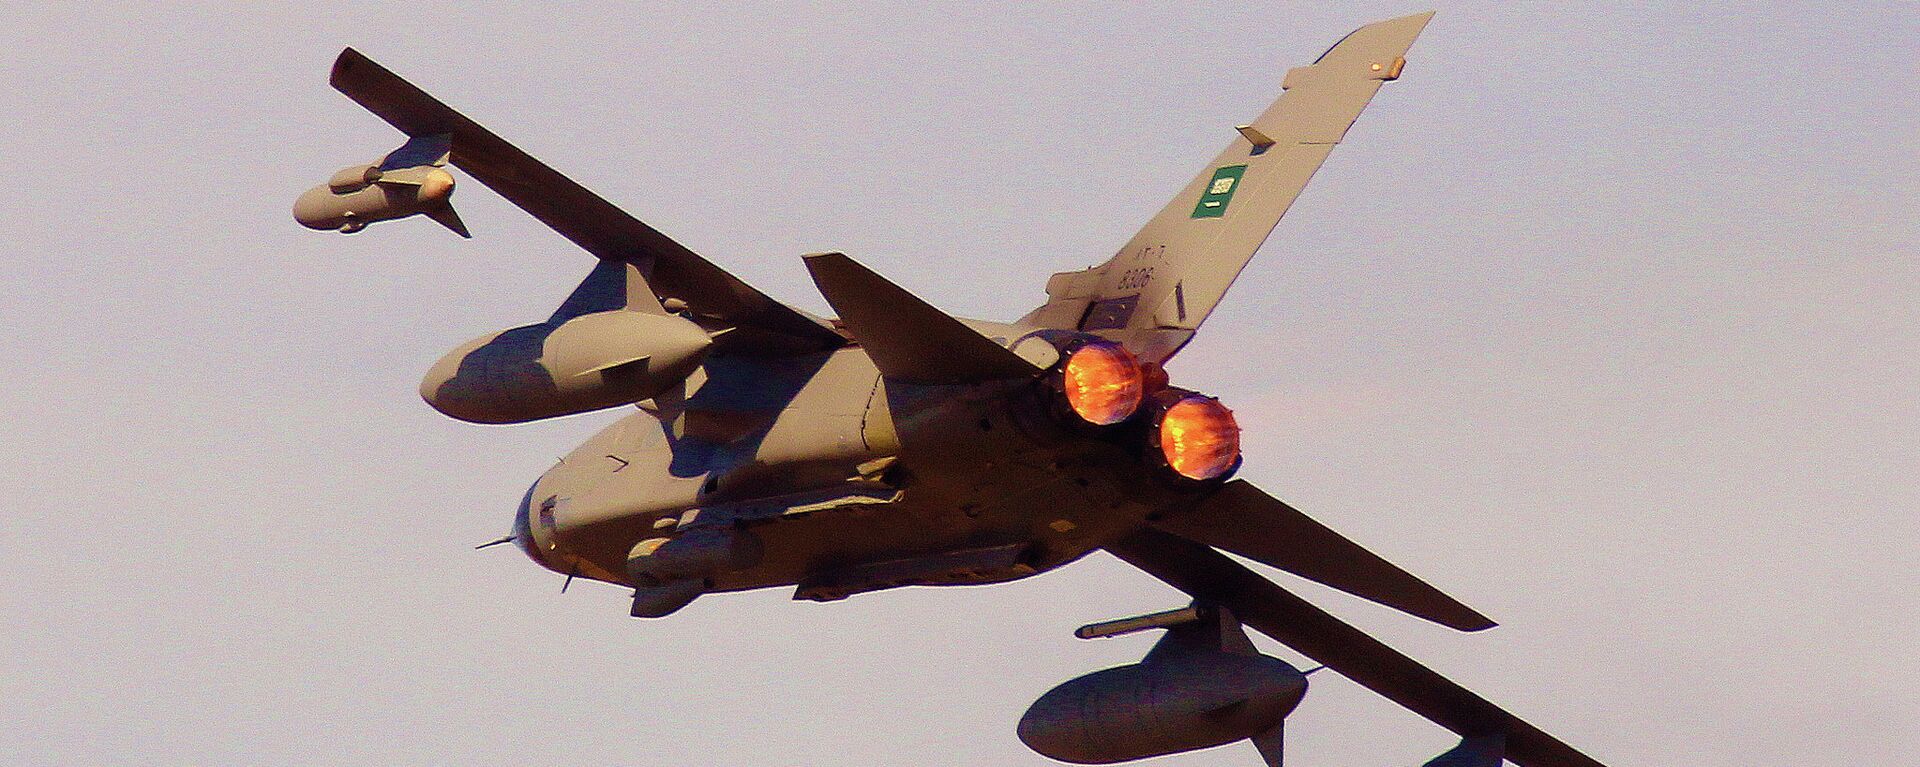 Tornado - Royal Saudi Air Force - Sputnik International, 1920, 05.02.2021